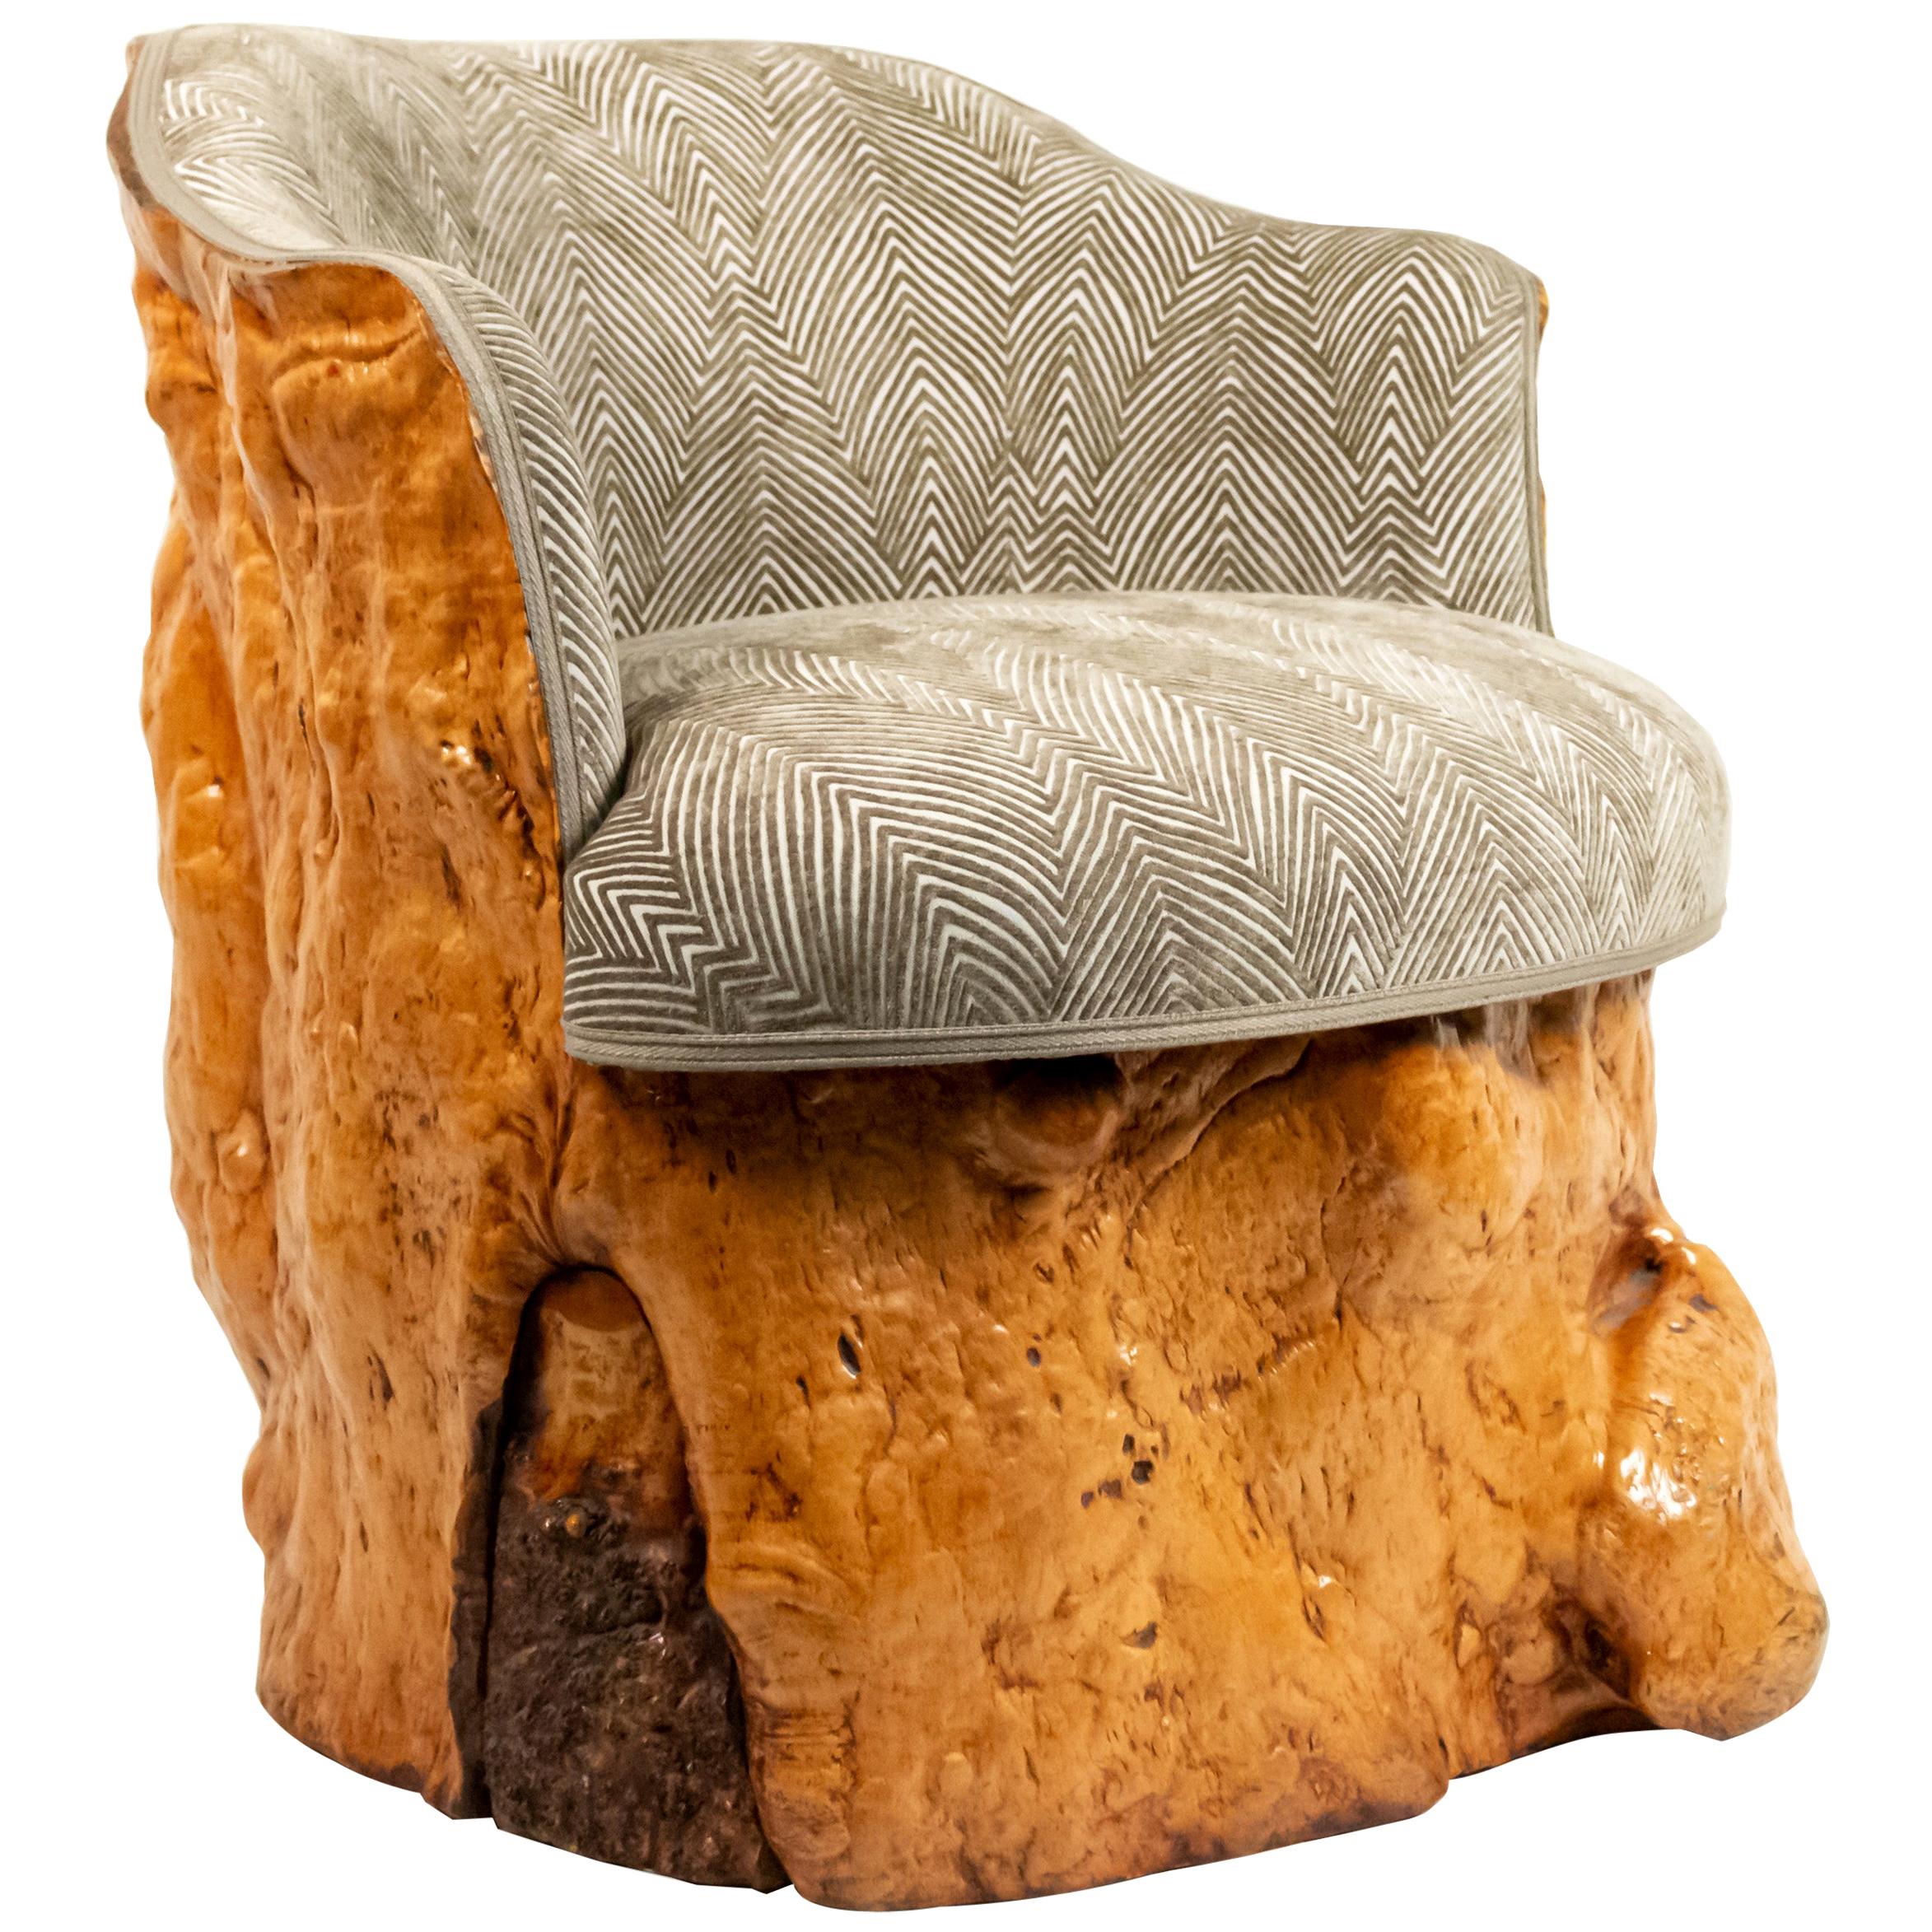 Rustic Continental Burl Wood Armchair